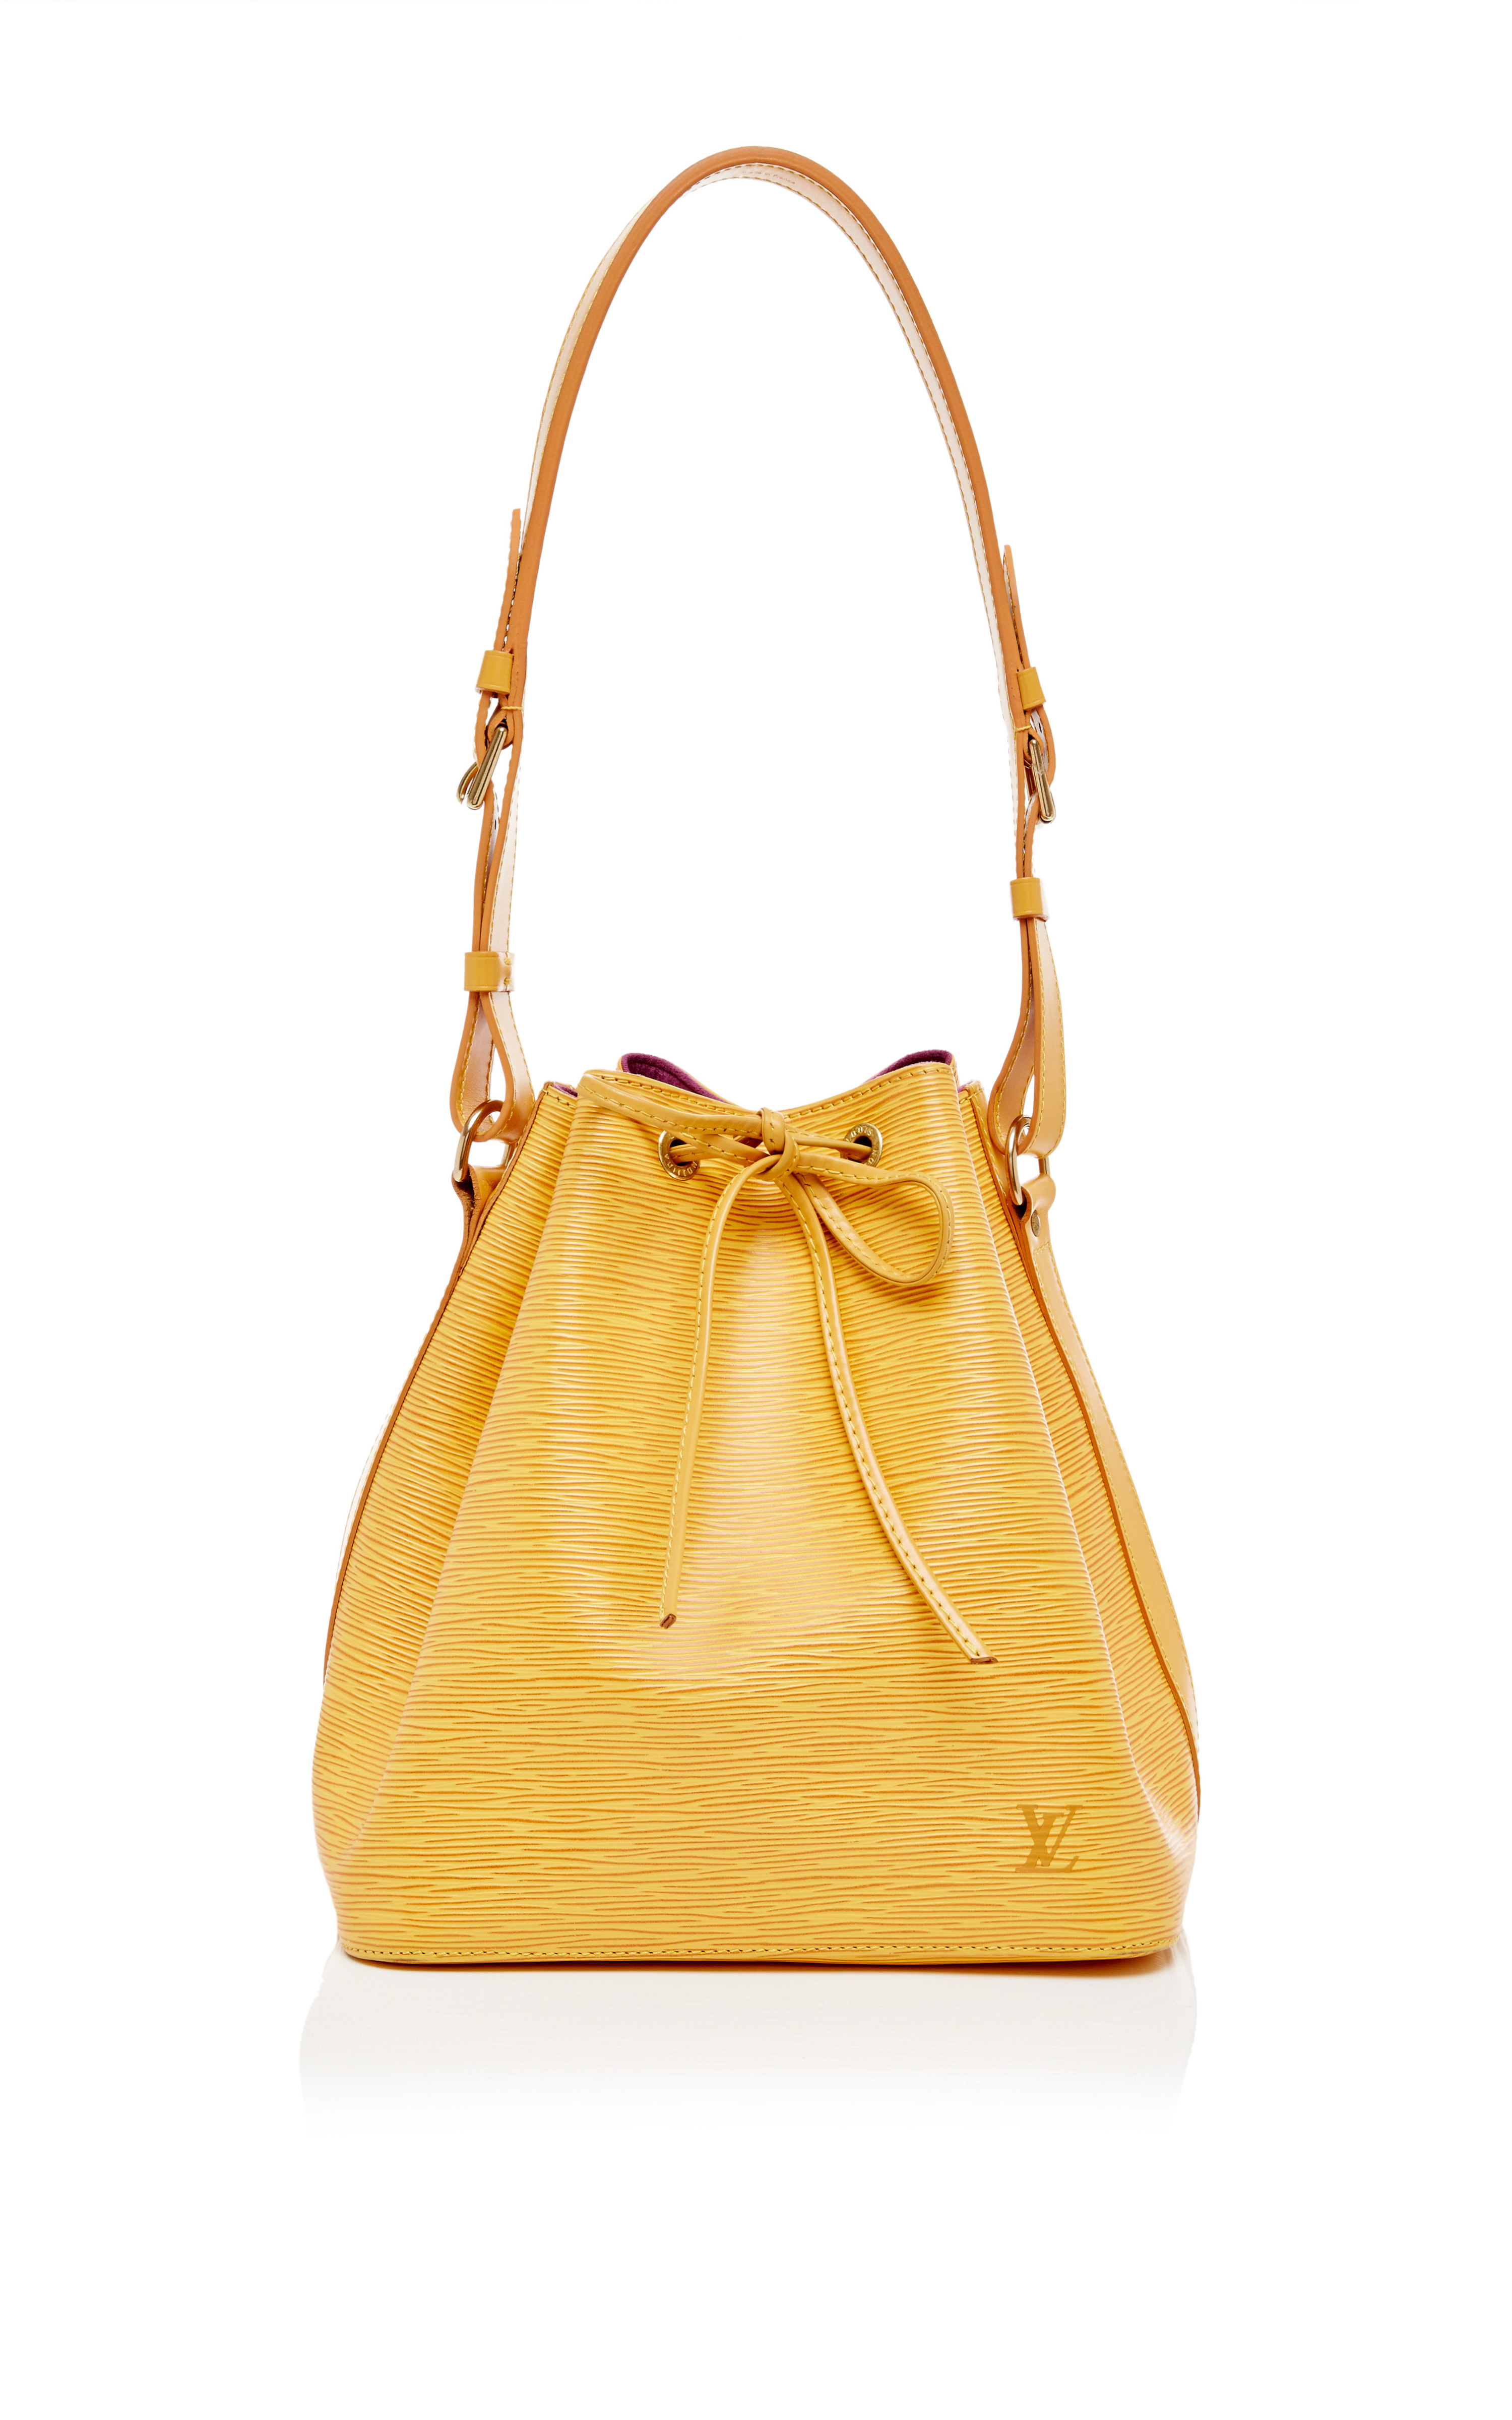 Louis Vuitton Cipango Gold Epi Leather Petit Noe Bag Louis Vuitton